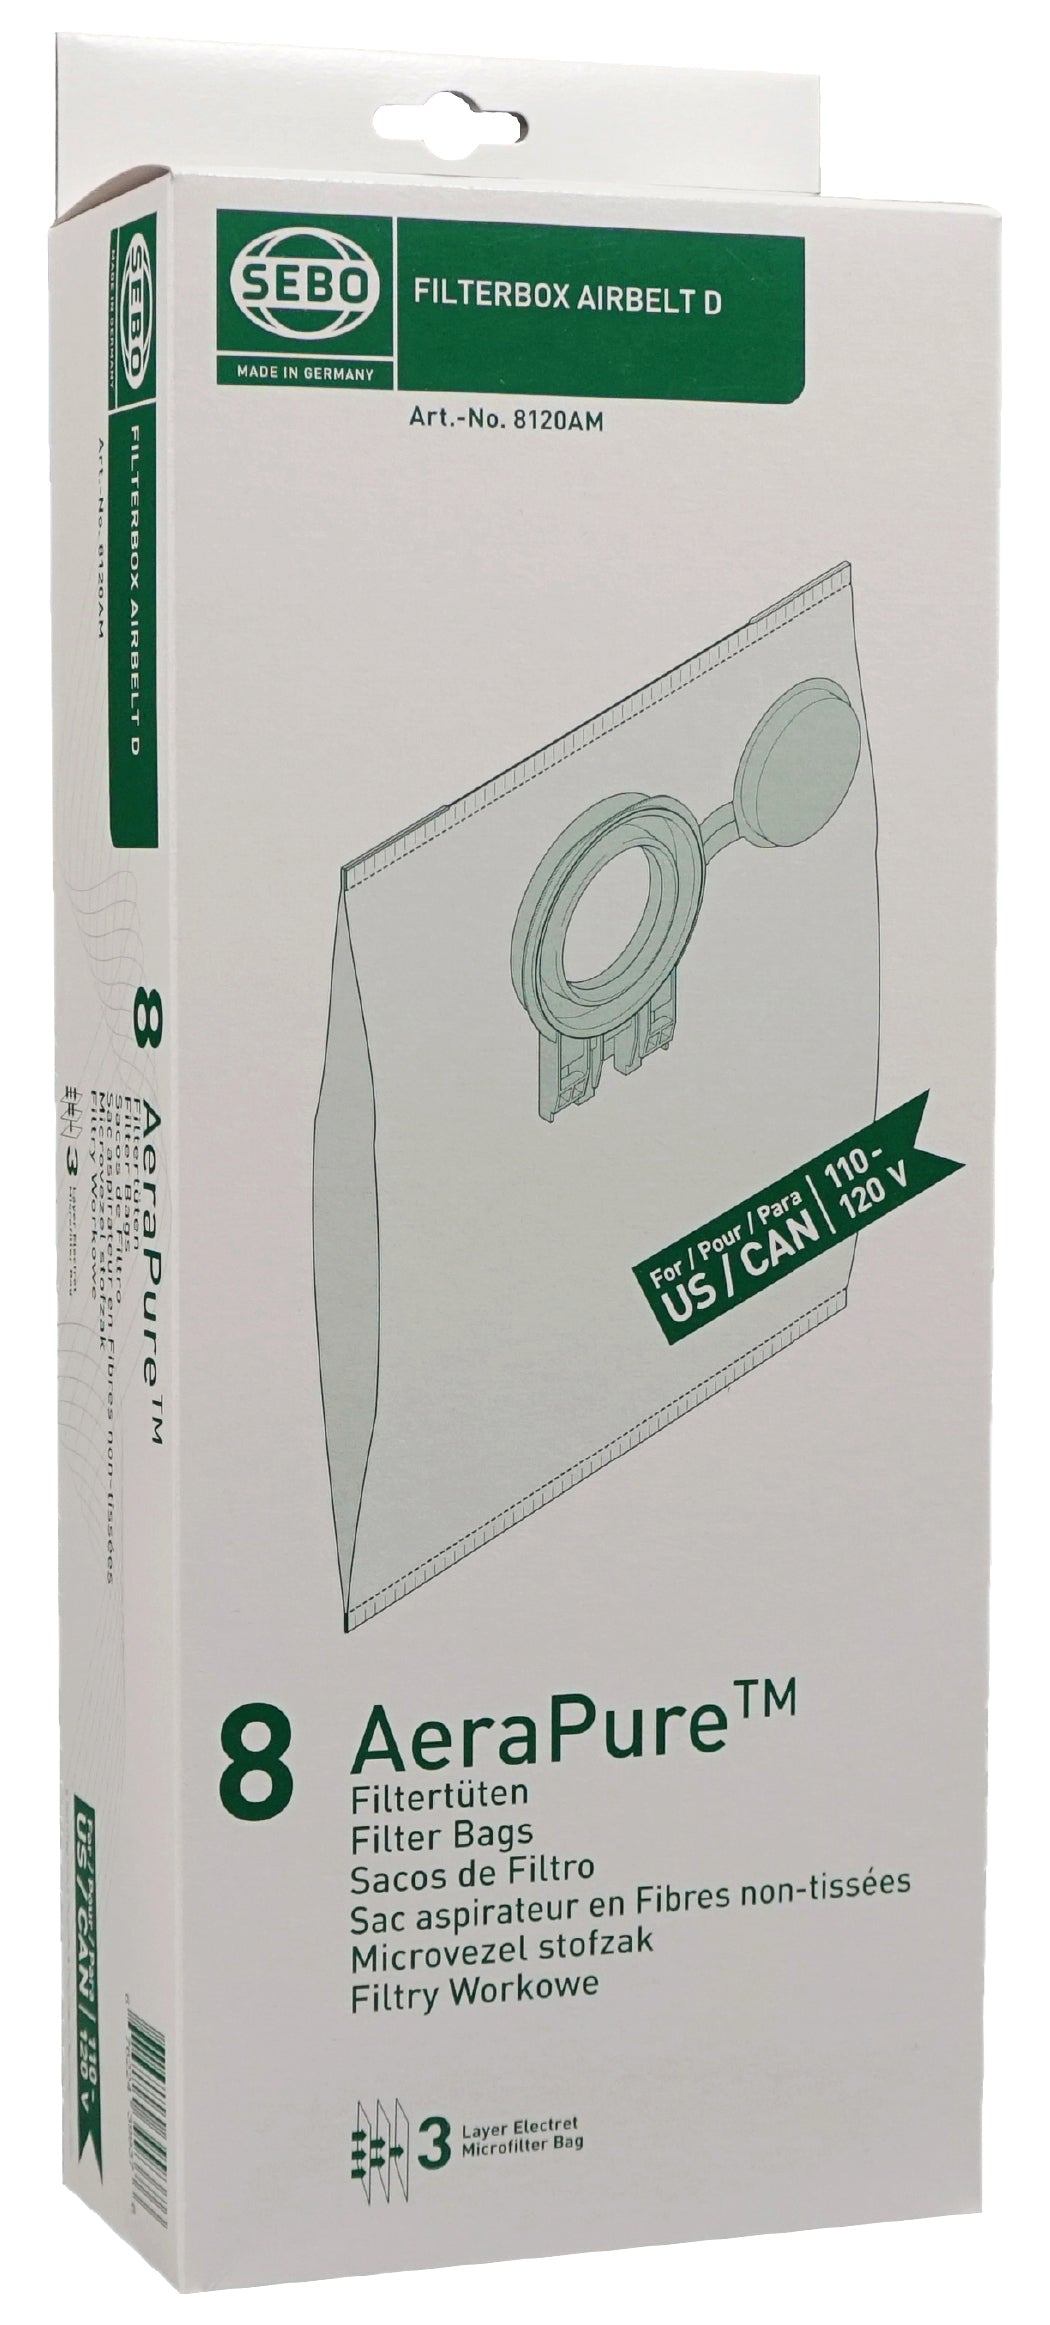 SEBO 8120 Airbelt D Ultra 3-Ply AeraPure Filter Bags